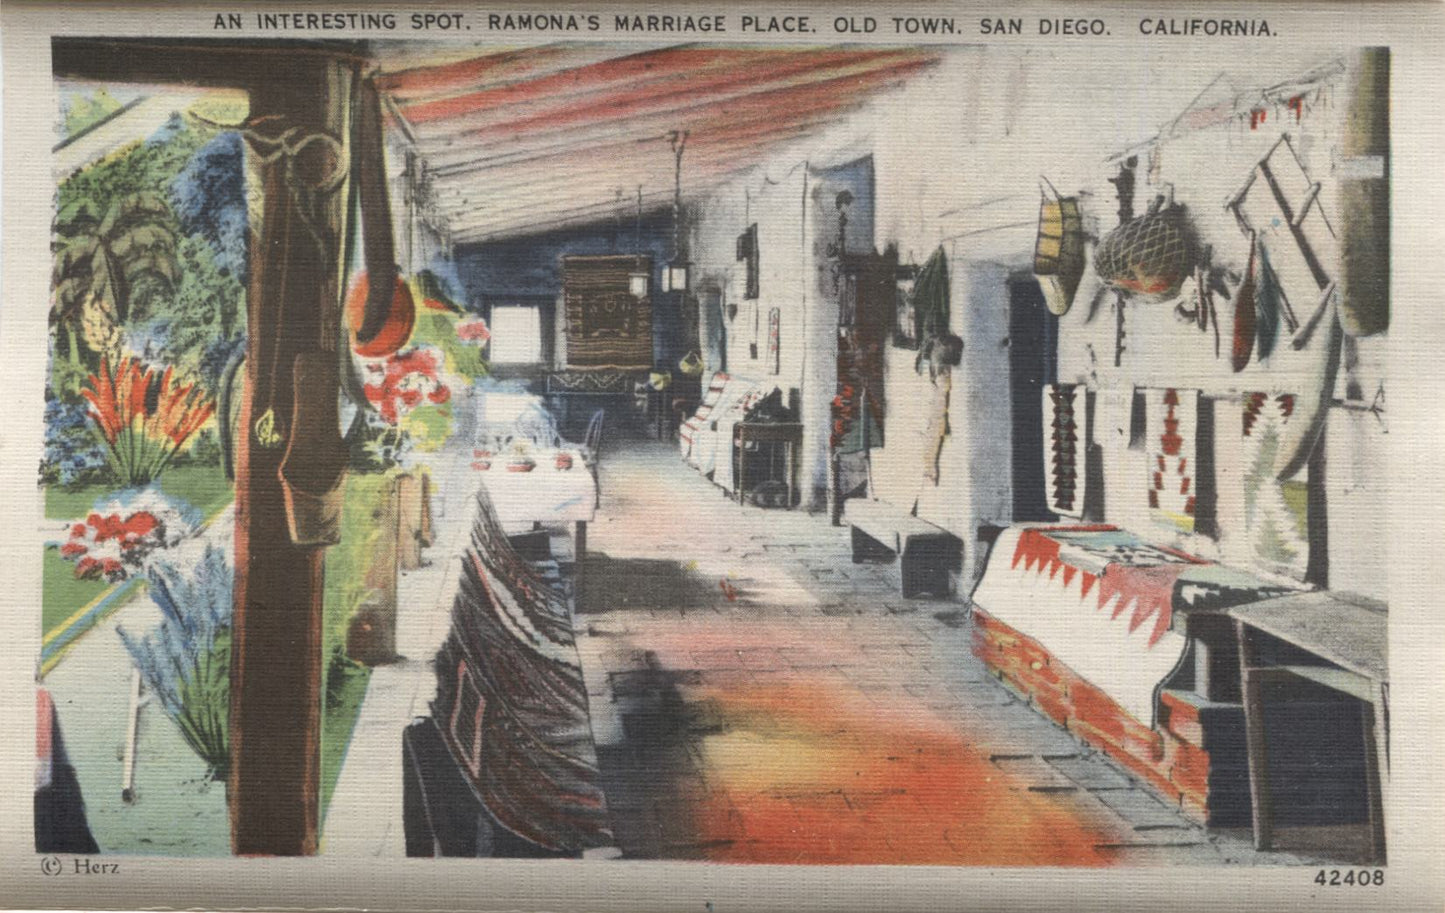 Ramona's Marriage Place, San Diego, California Vintage Souvenir Postcard Folder